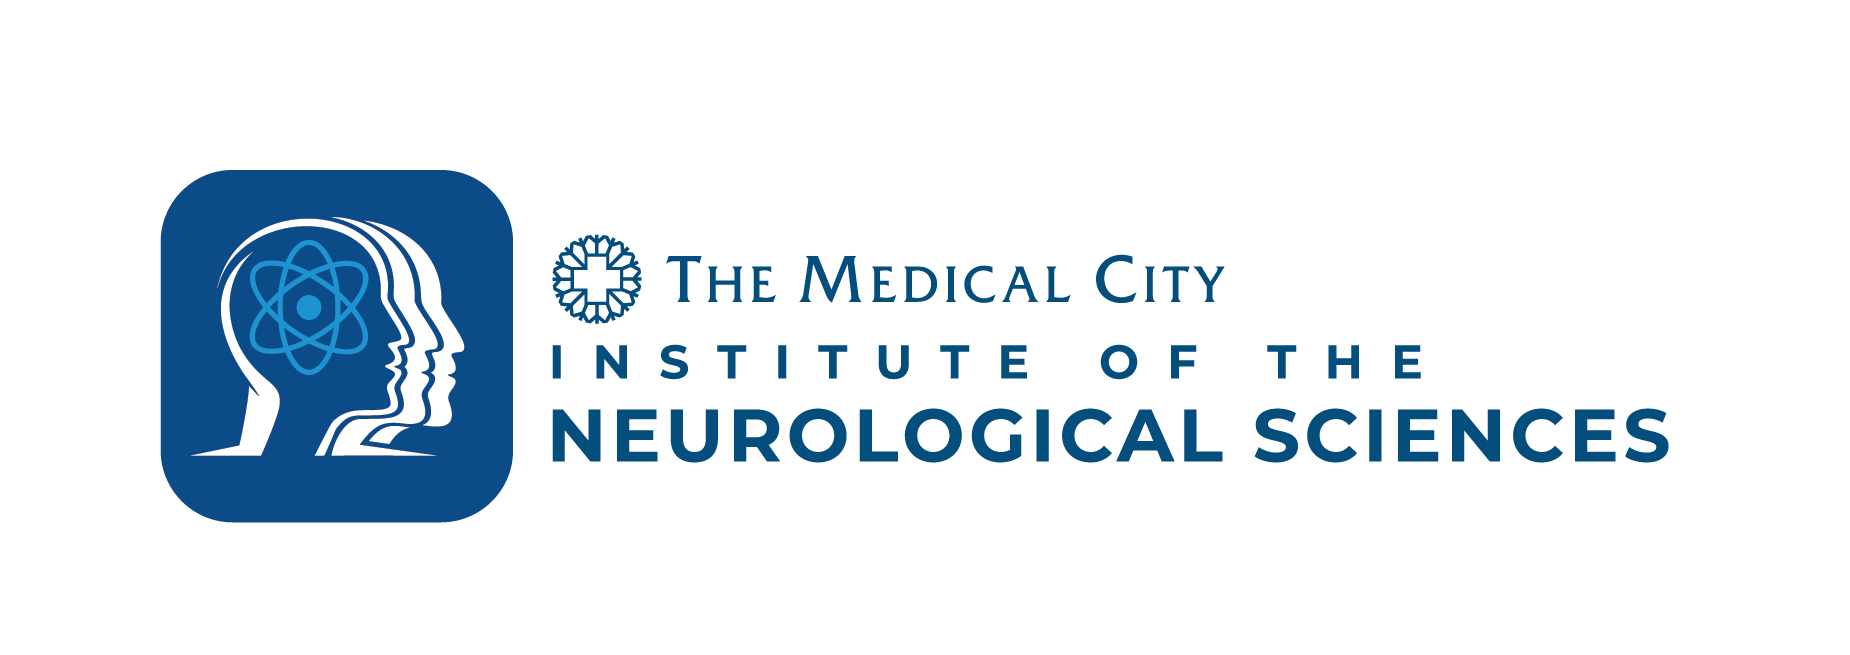 tmc institute of the neurological sciences logo